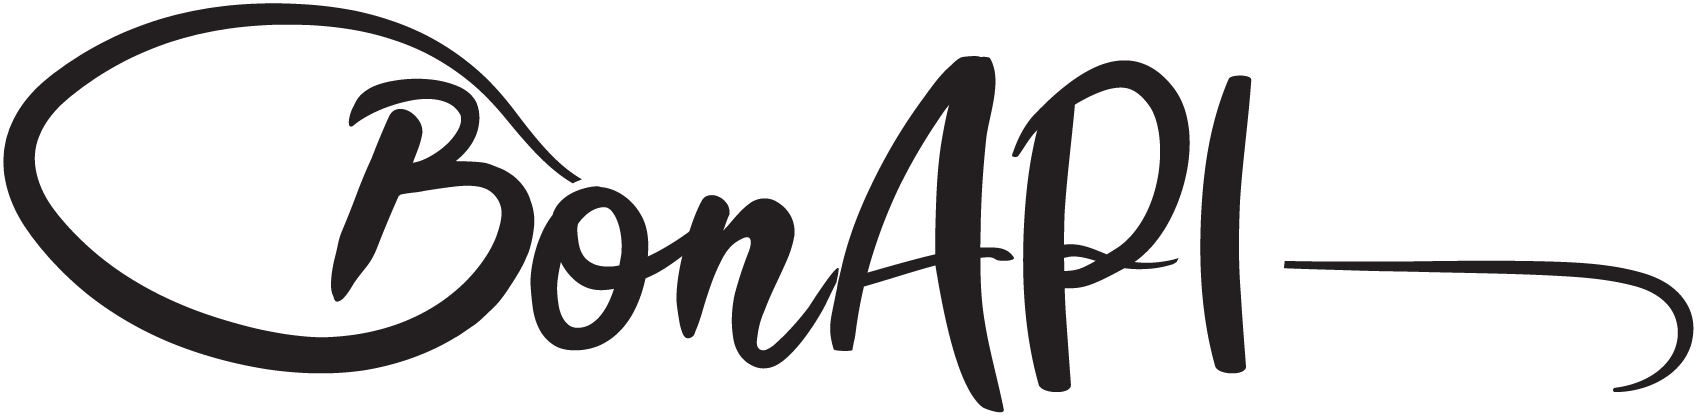 BonAPI-logo